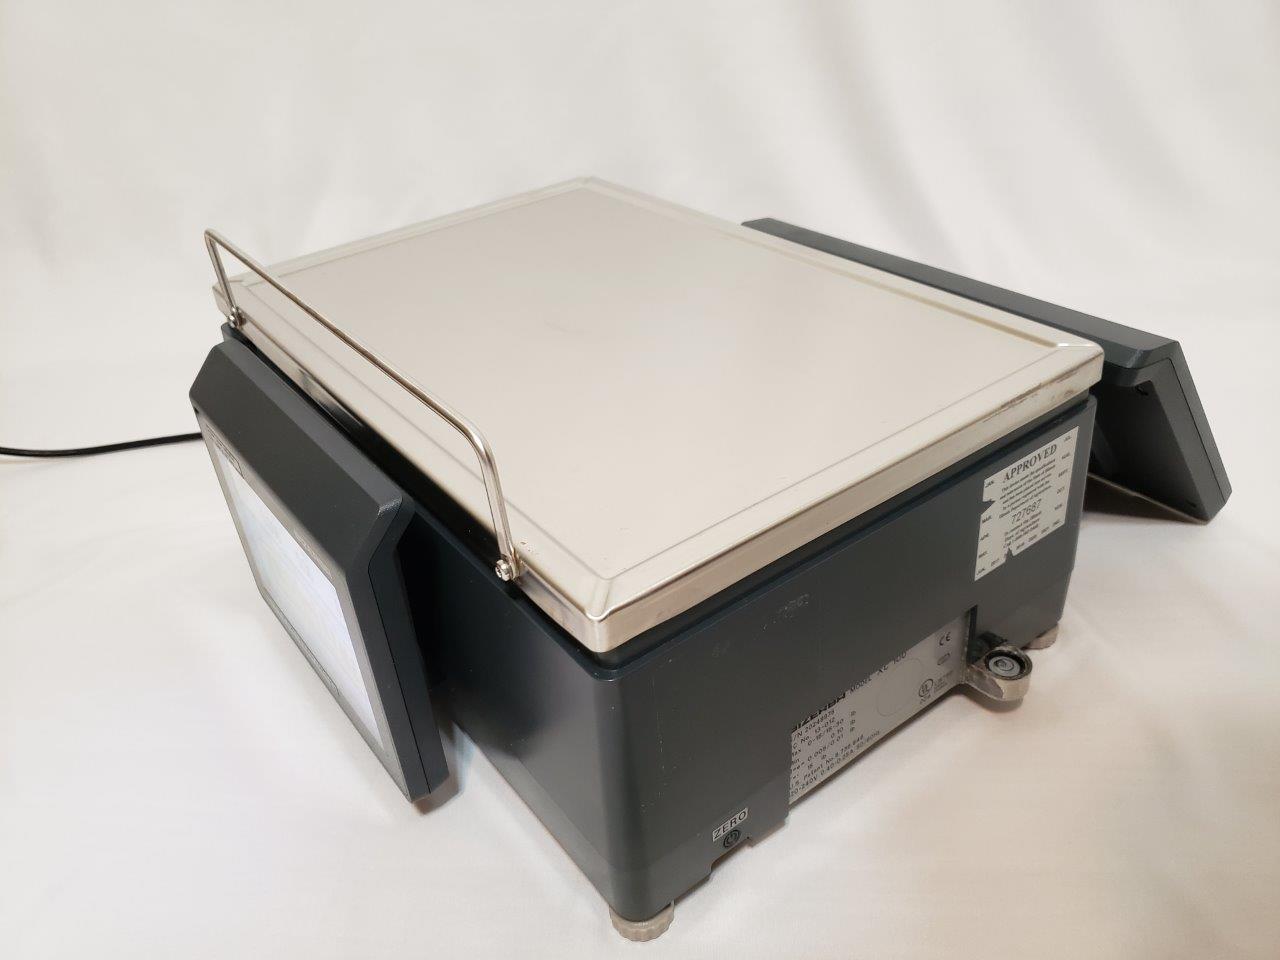 Bizerba Multimedia Scale XC 100 with 3-in-1 Printer